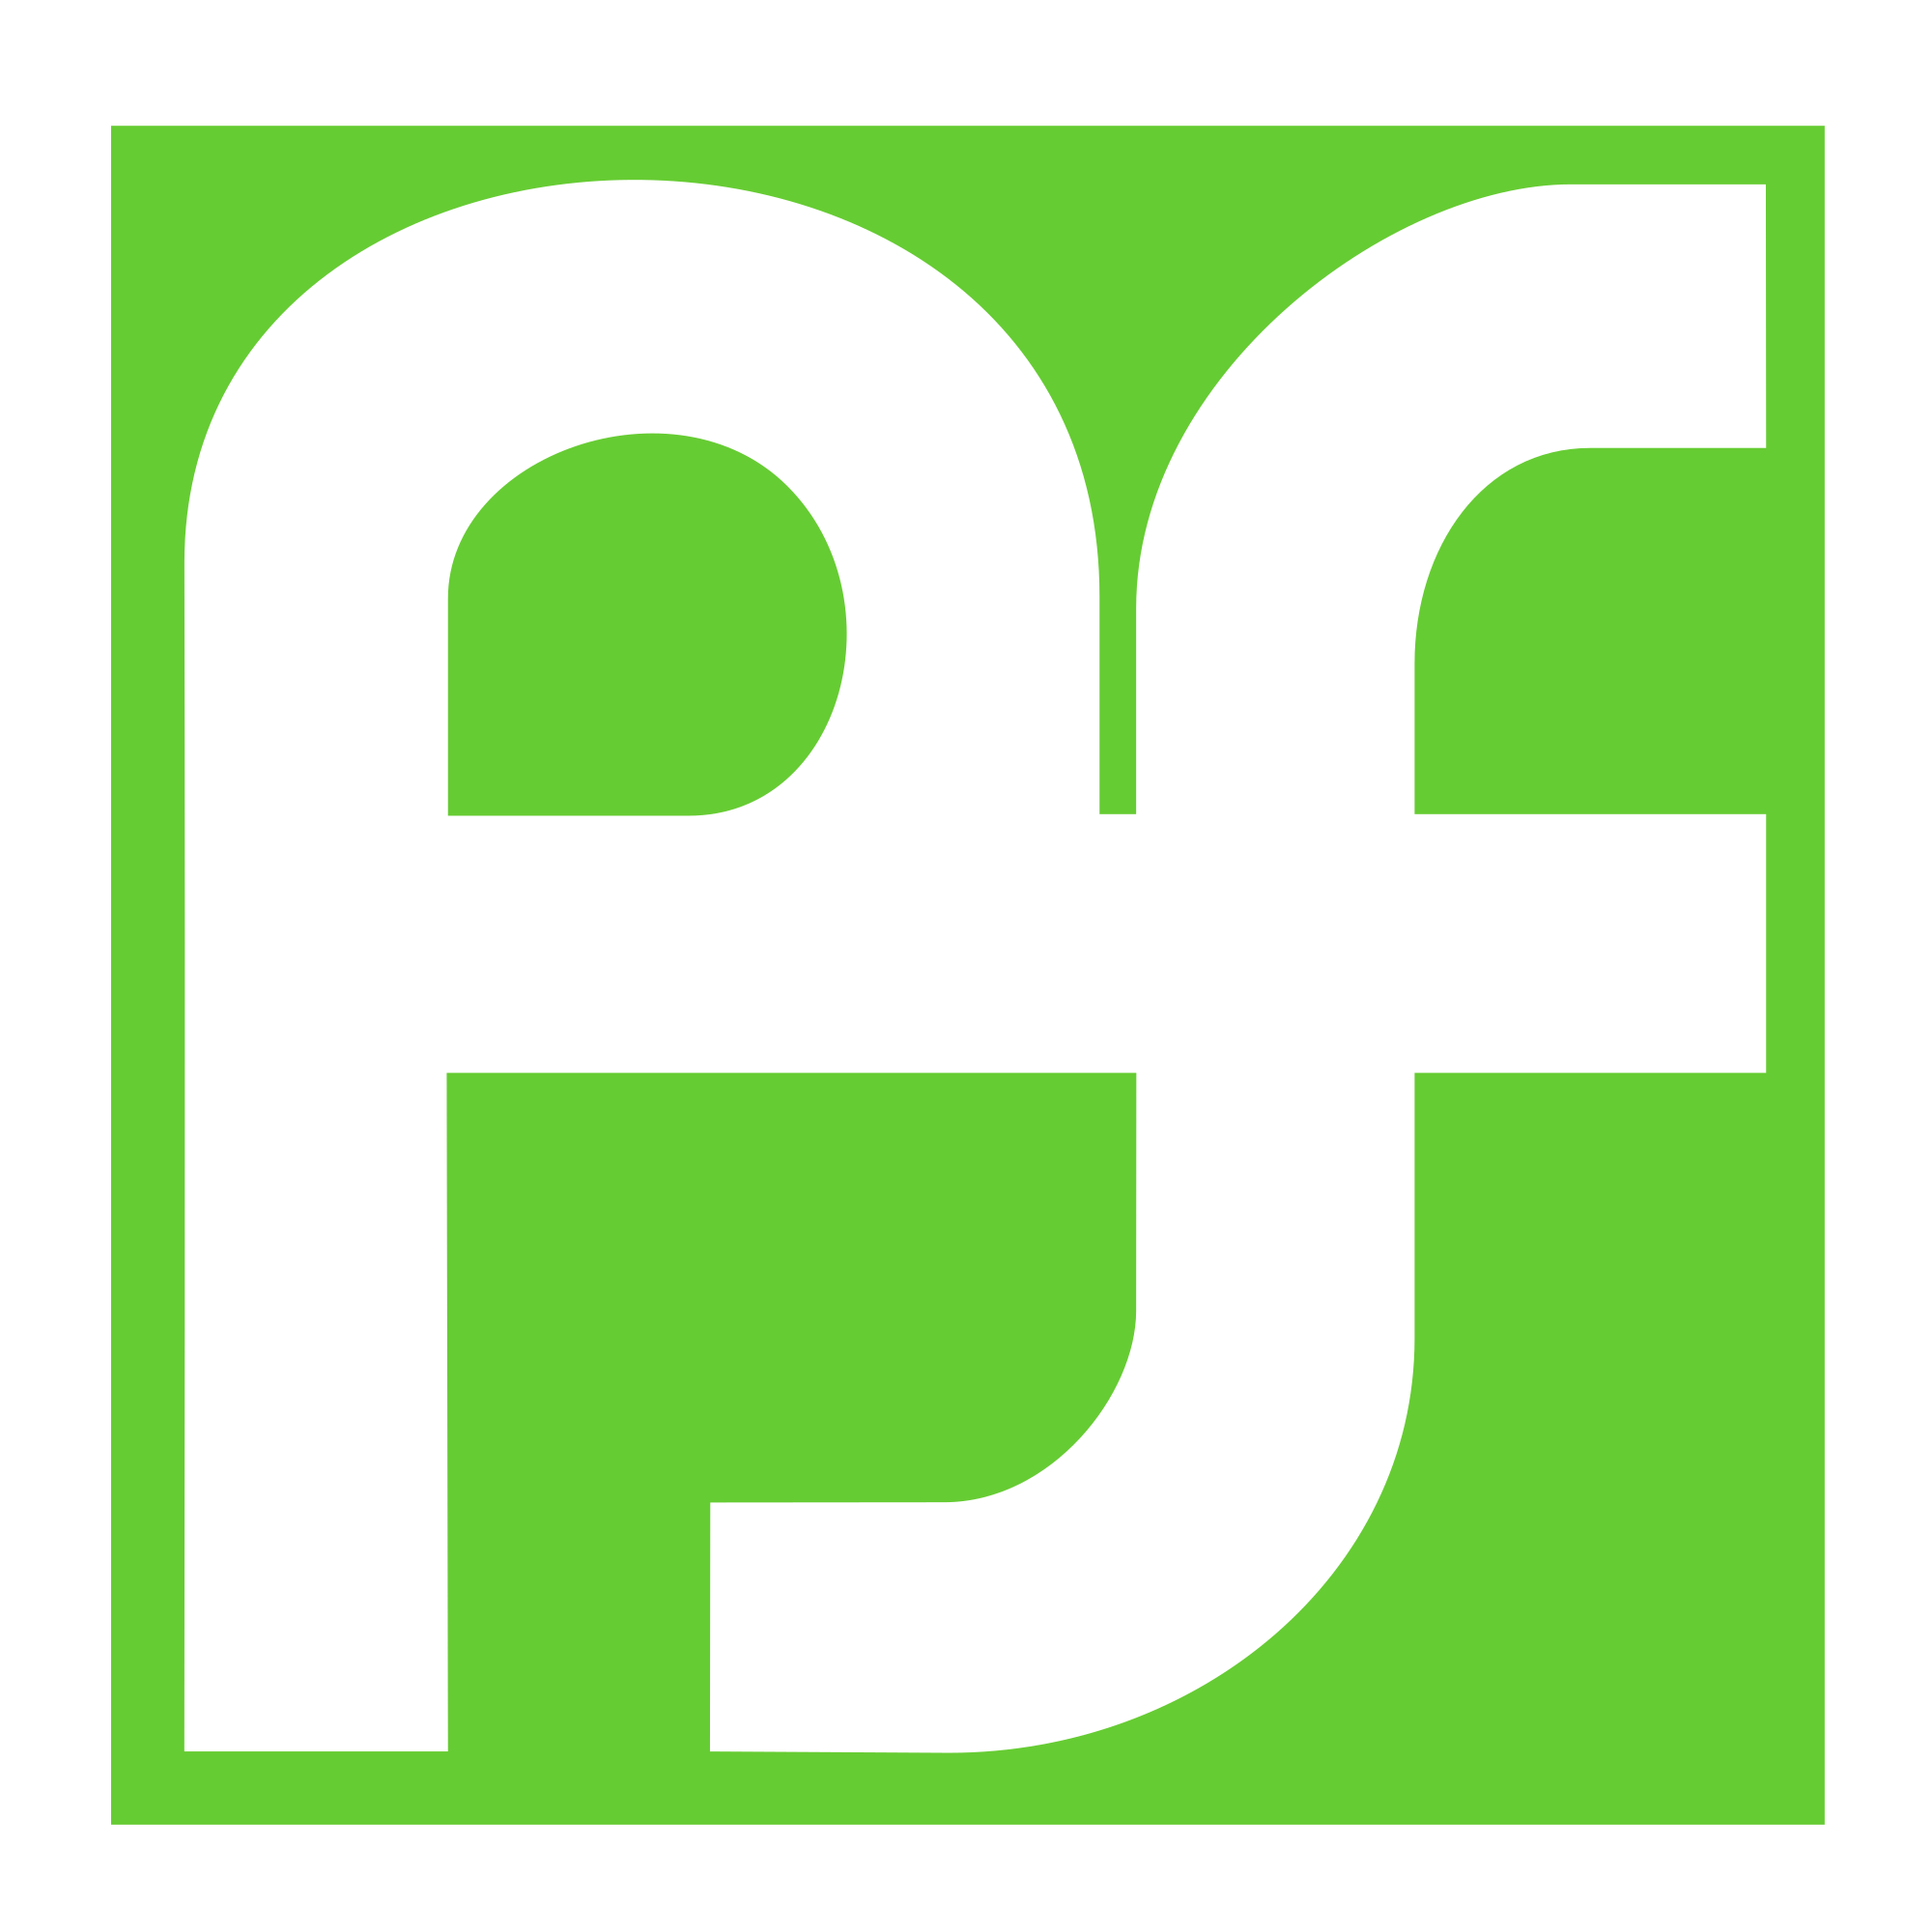 PF Logo - File:Panafacom Pf logo.svg - Wikimedia Commons